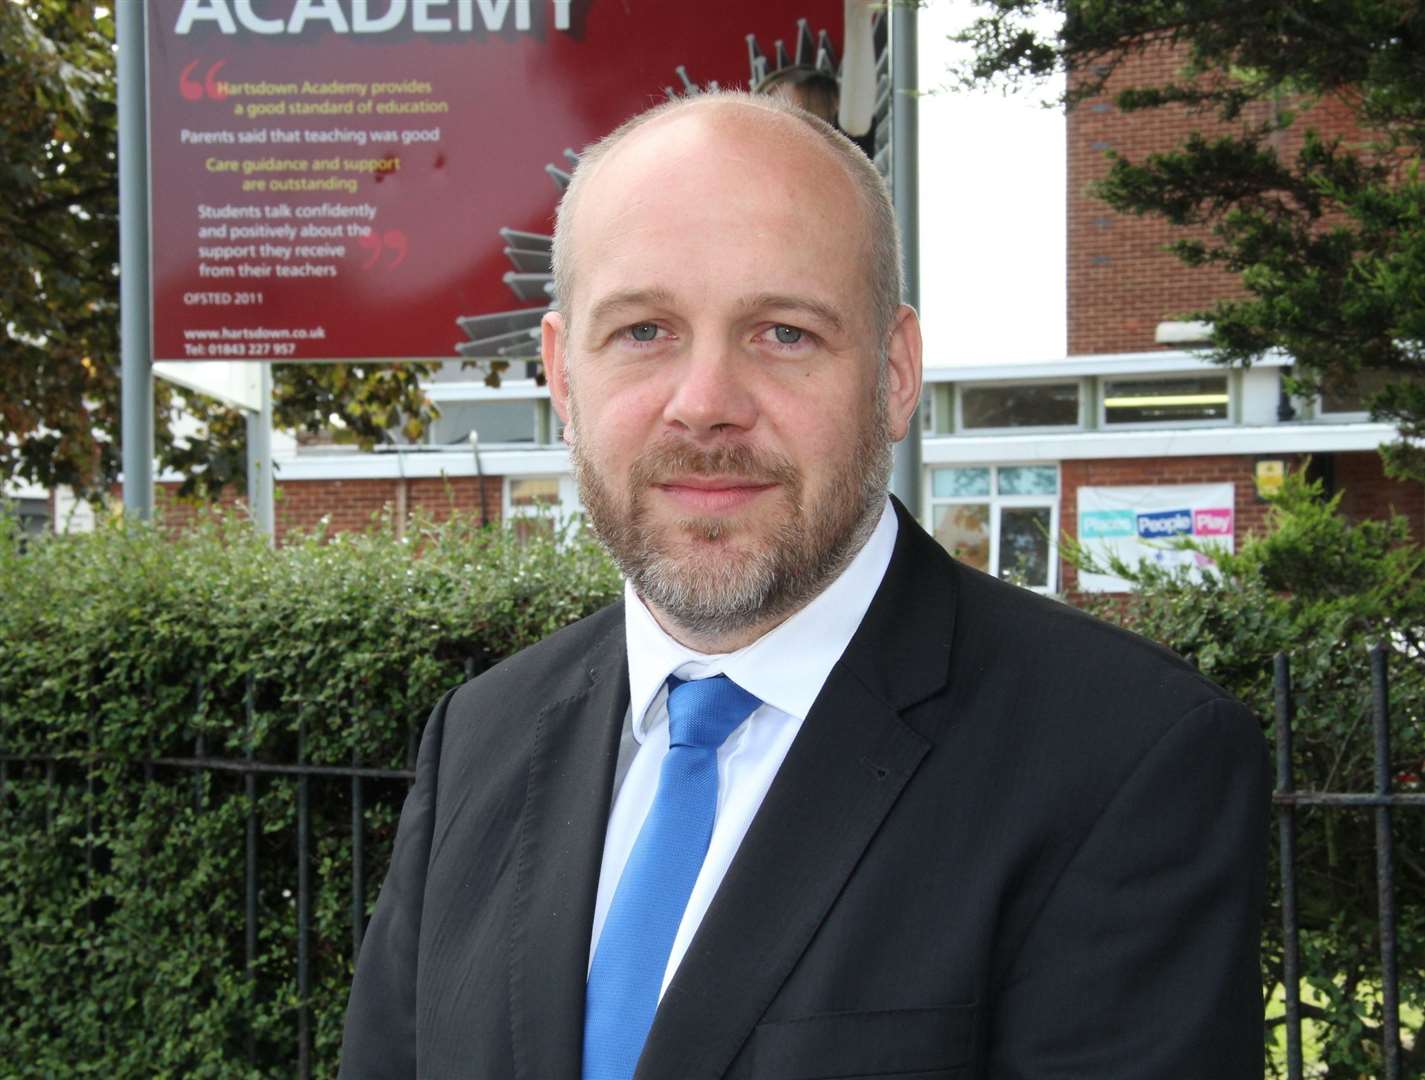 Matthew Tate is the head teacher at Hartsdown Academy in Margate